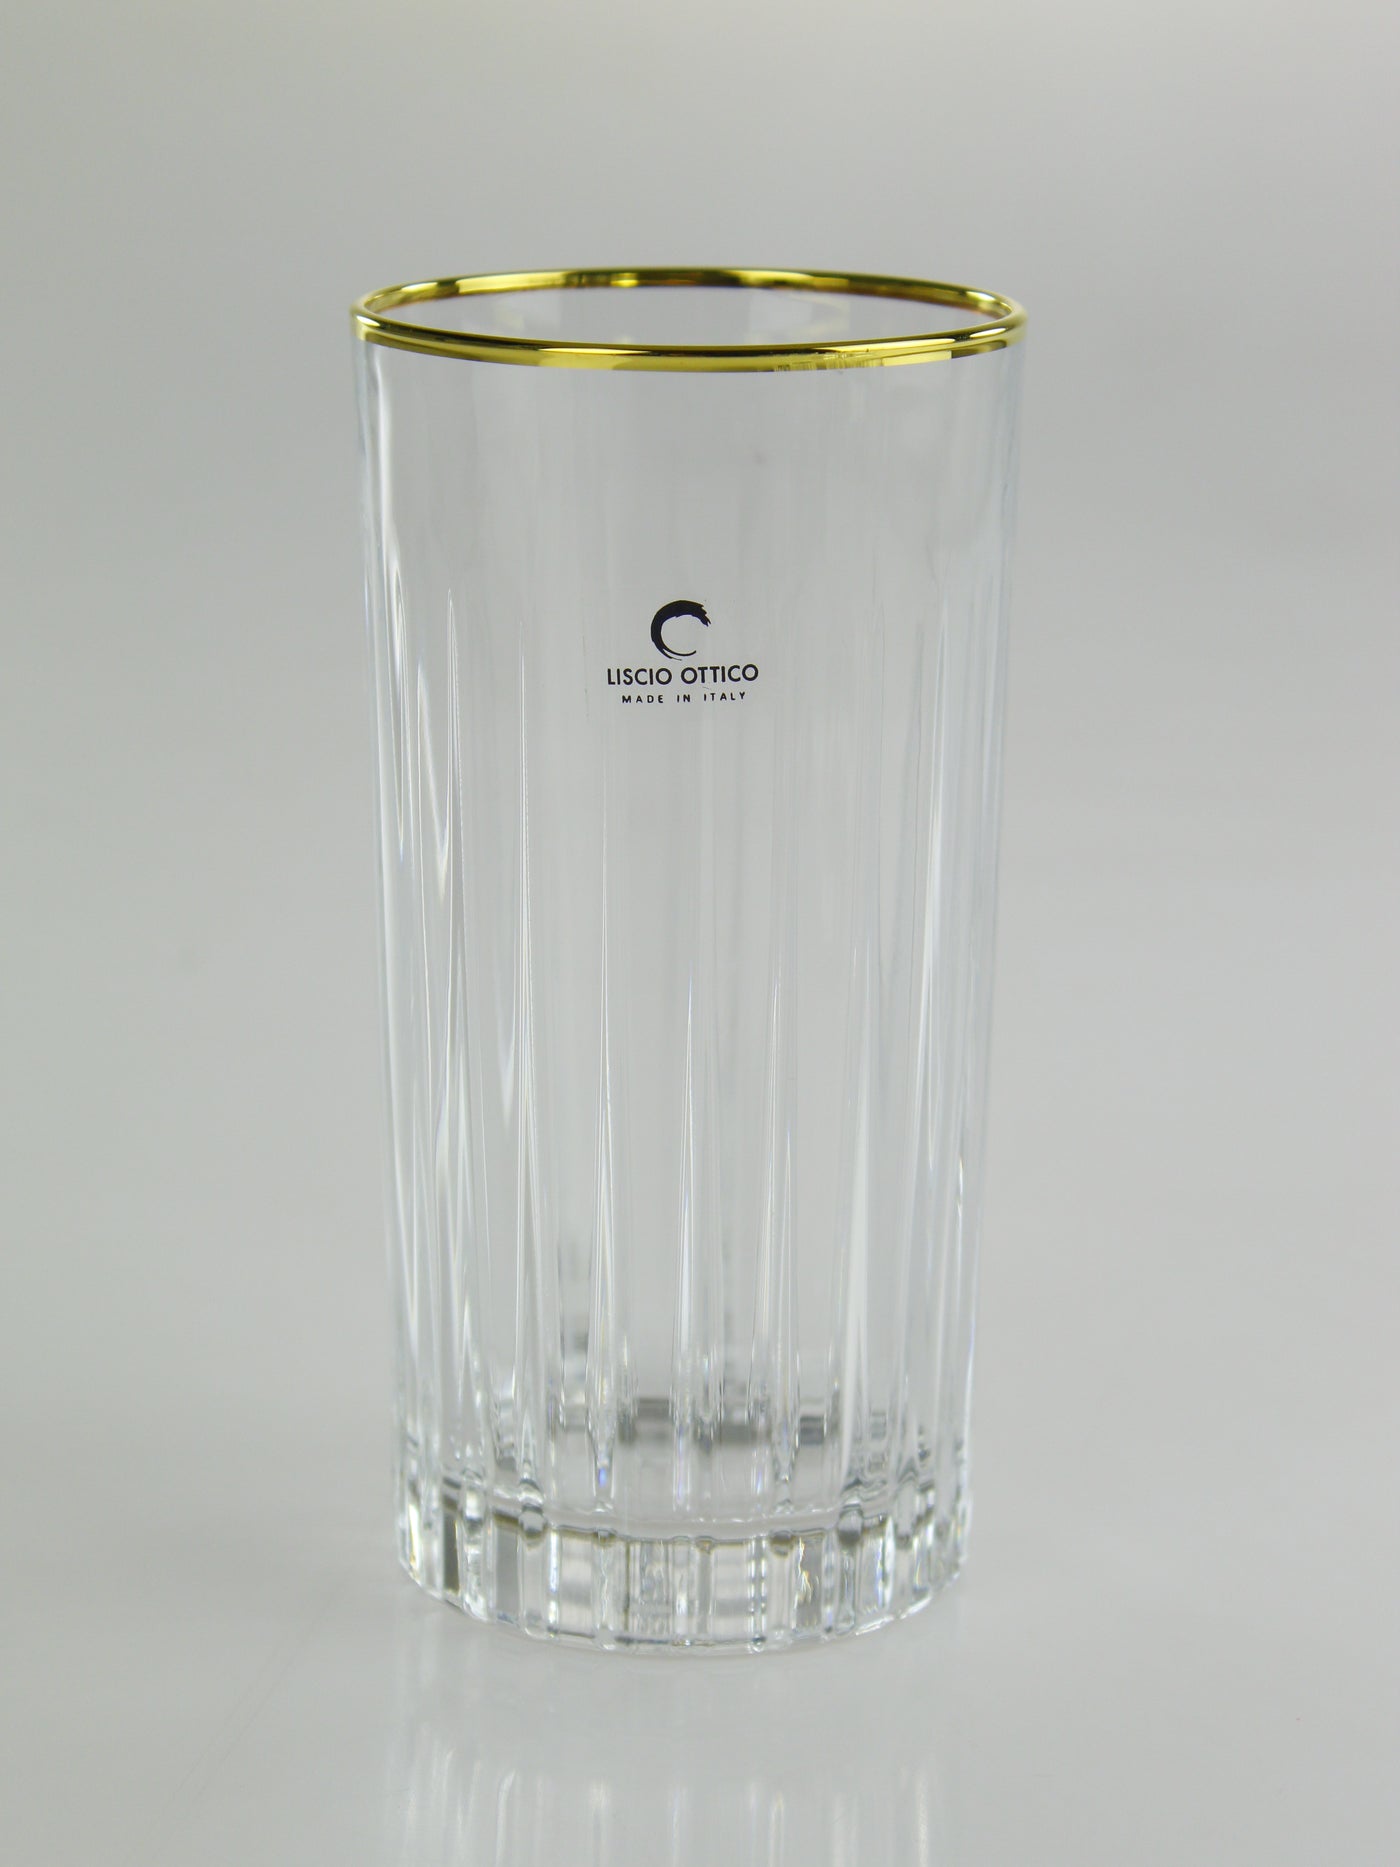 Liscio Ottico - Set of 6 Highball Glasses with Linear Design and Gold Rim